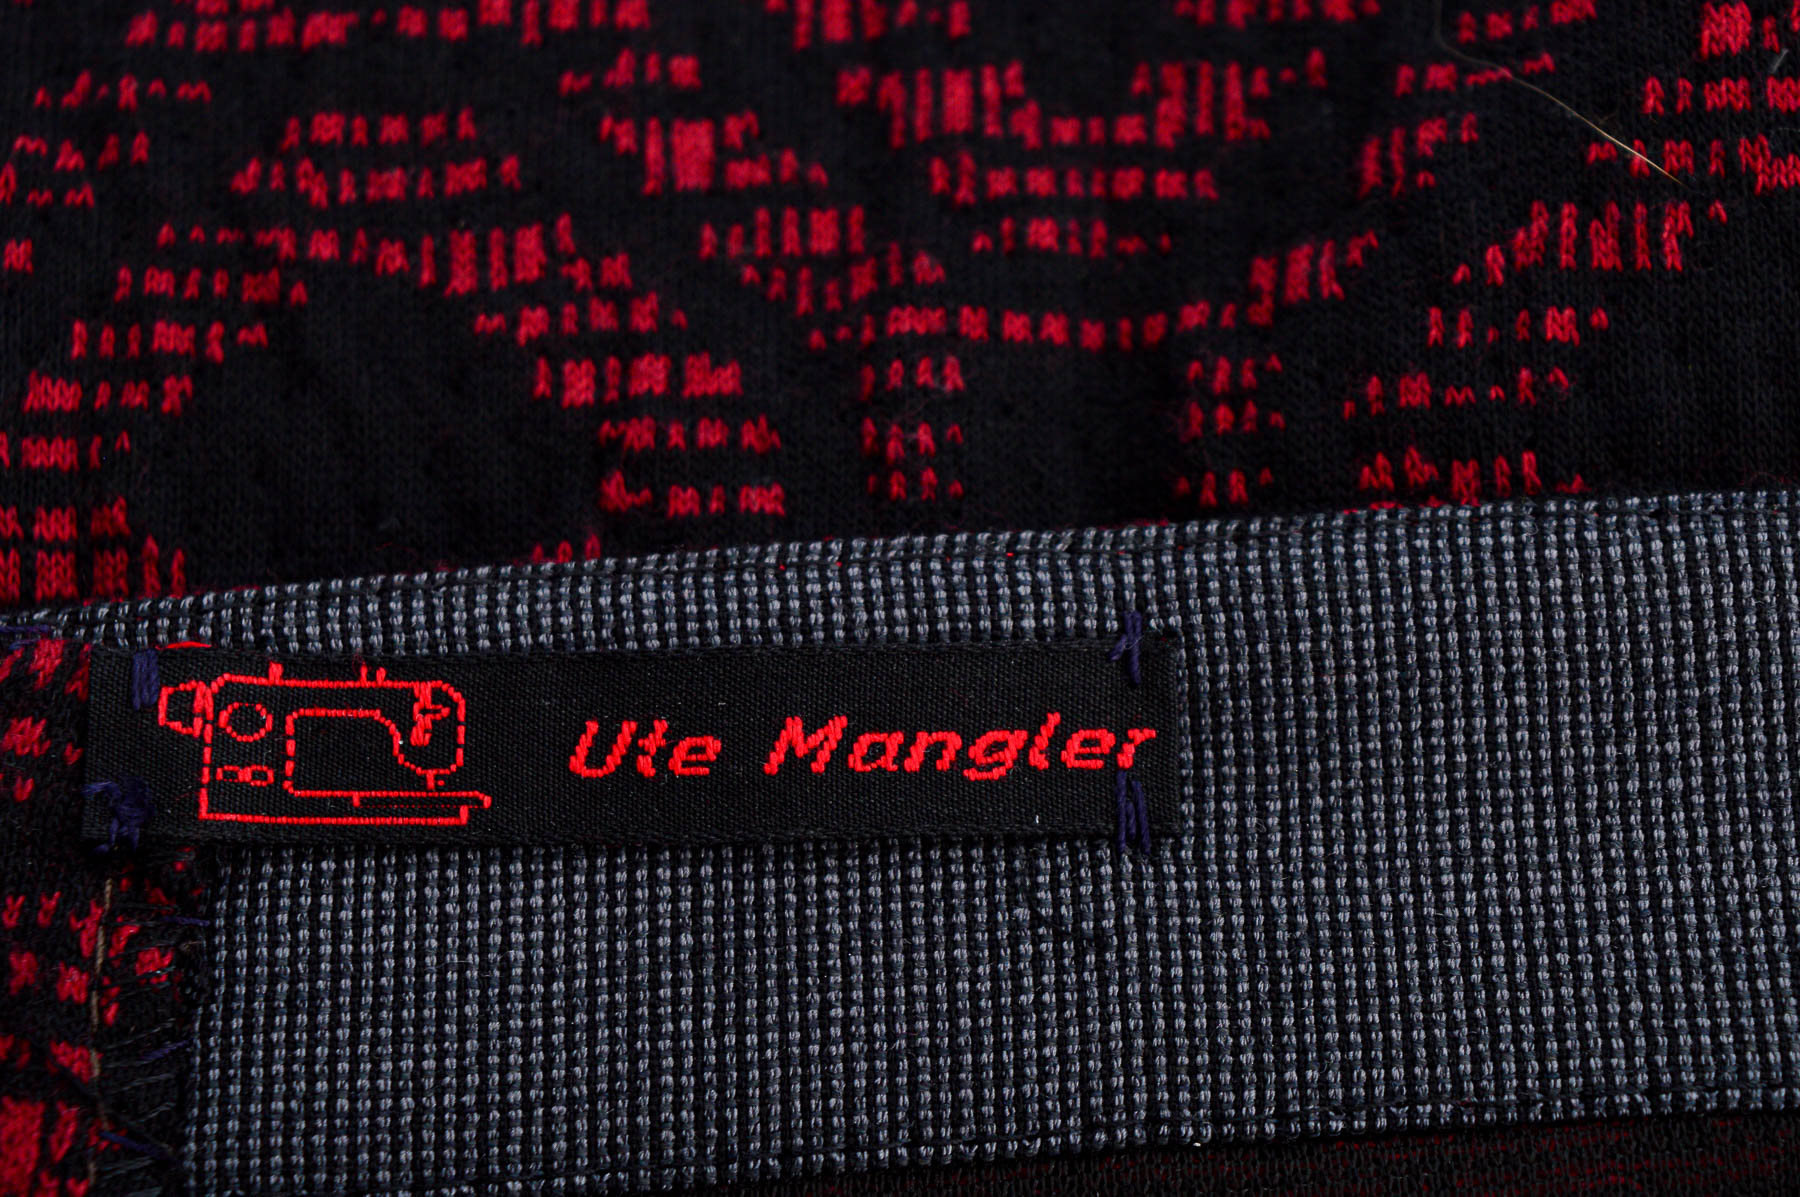 Spódnica - Ute Mangler - 2